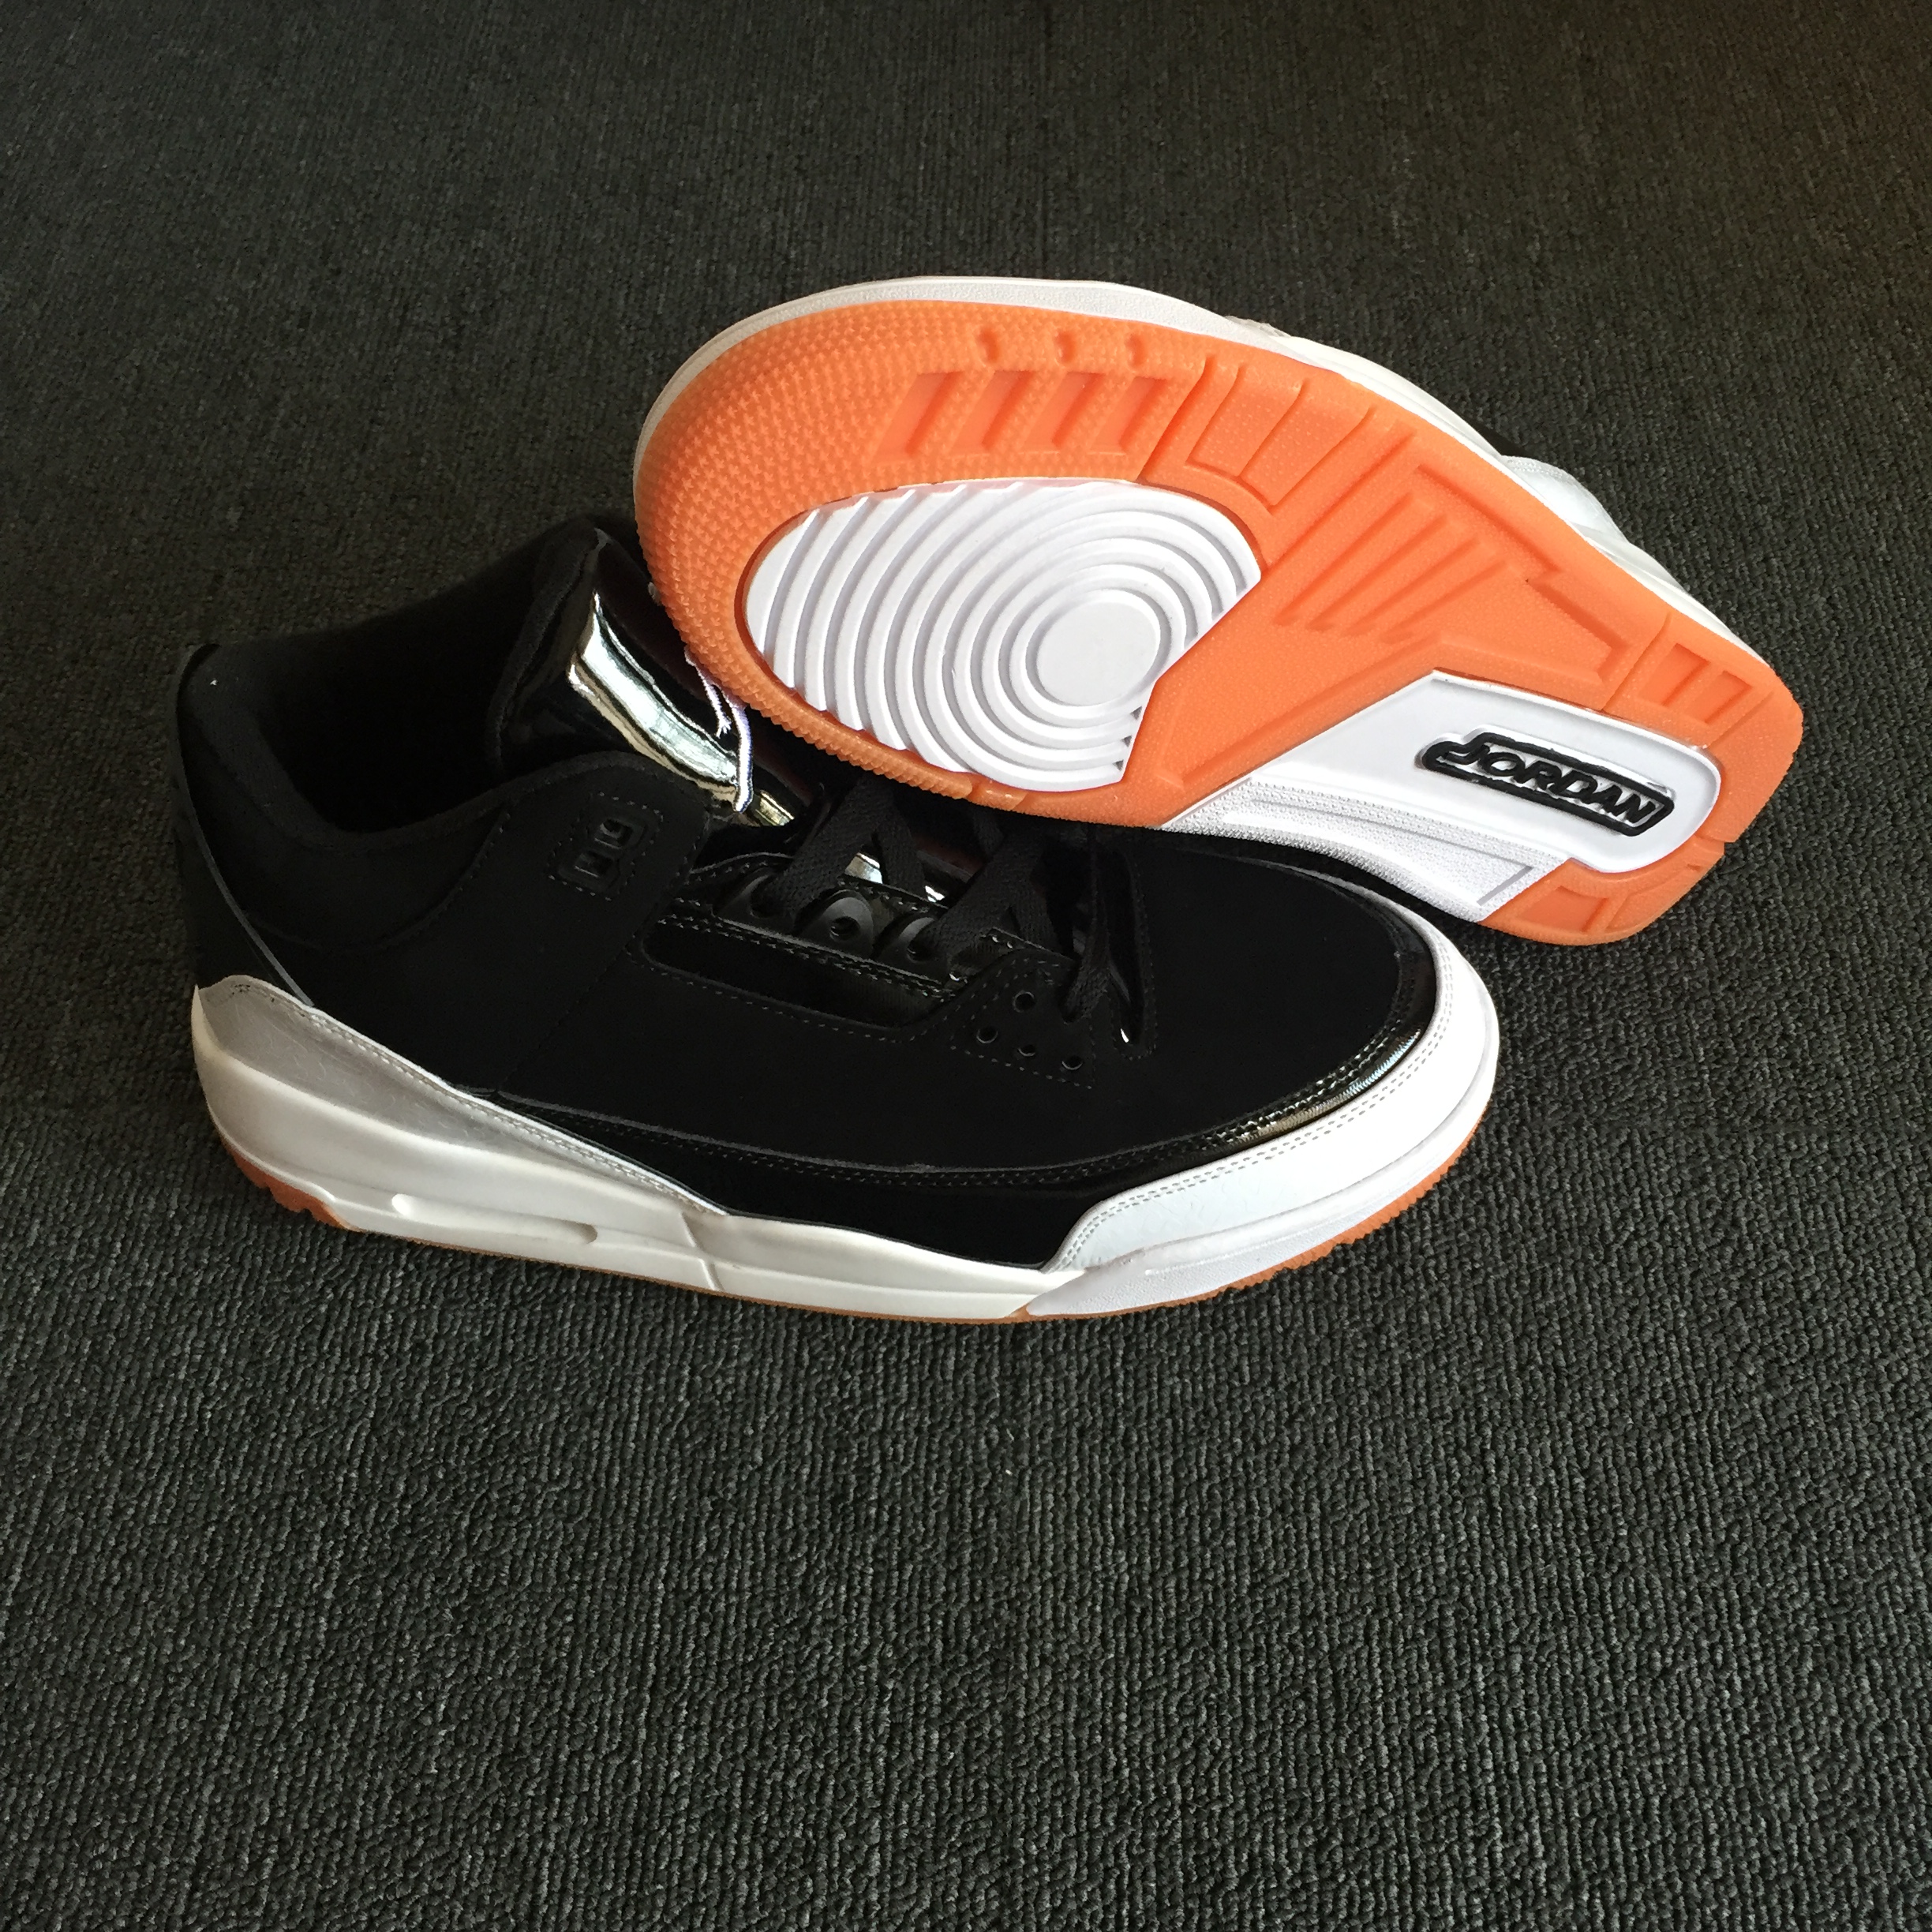 New Air Jordan 3 Retro Black Gum Sole Shoes